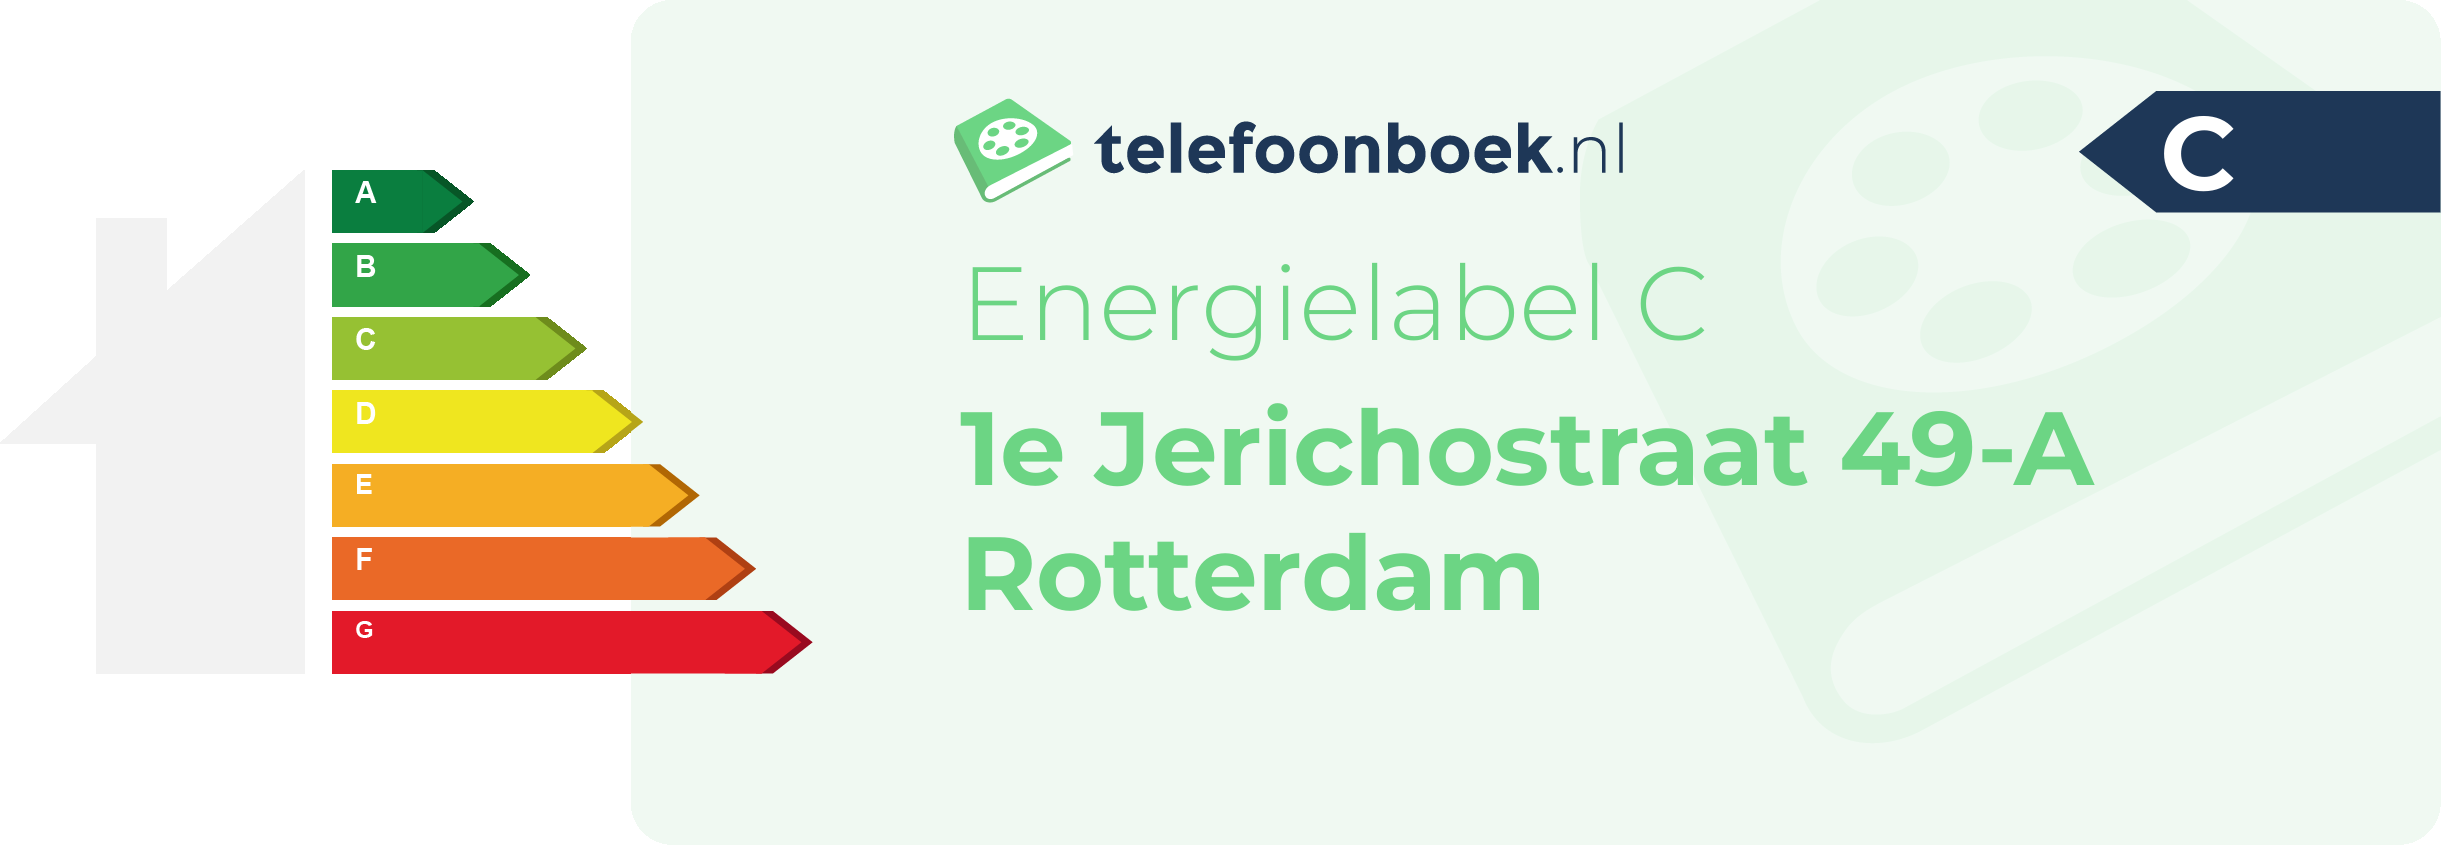 Energielabel 1e Jerichostraat 49-A Rotterdam